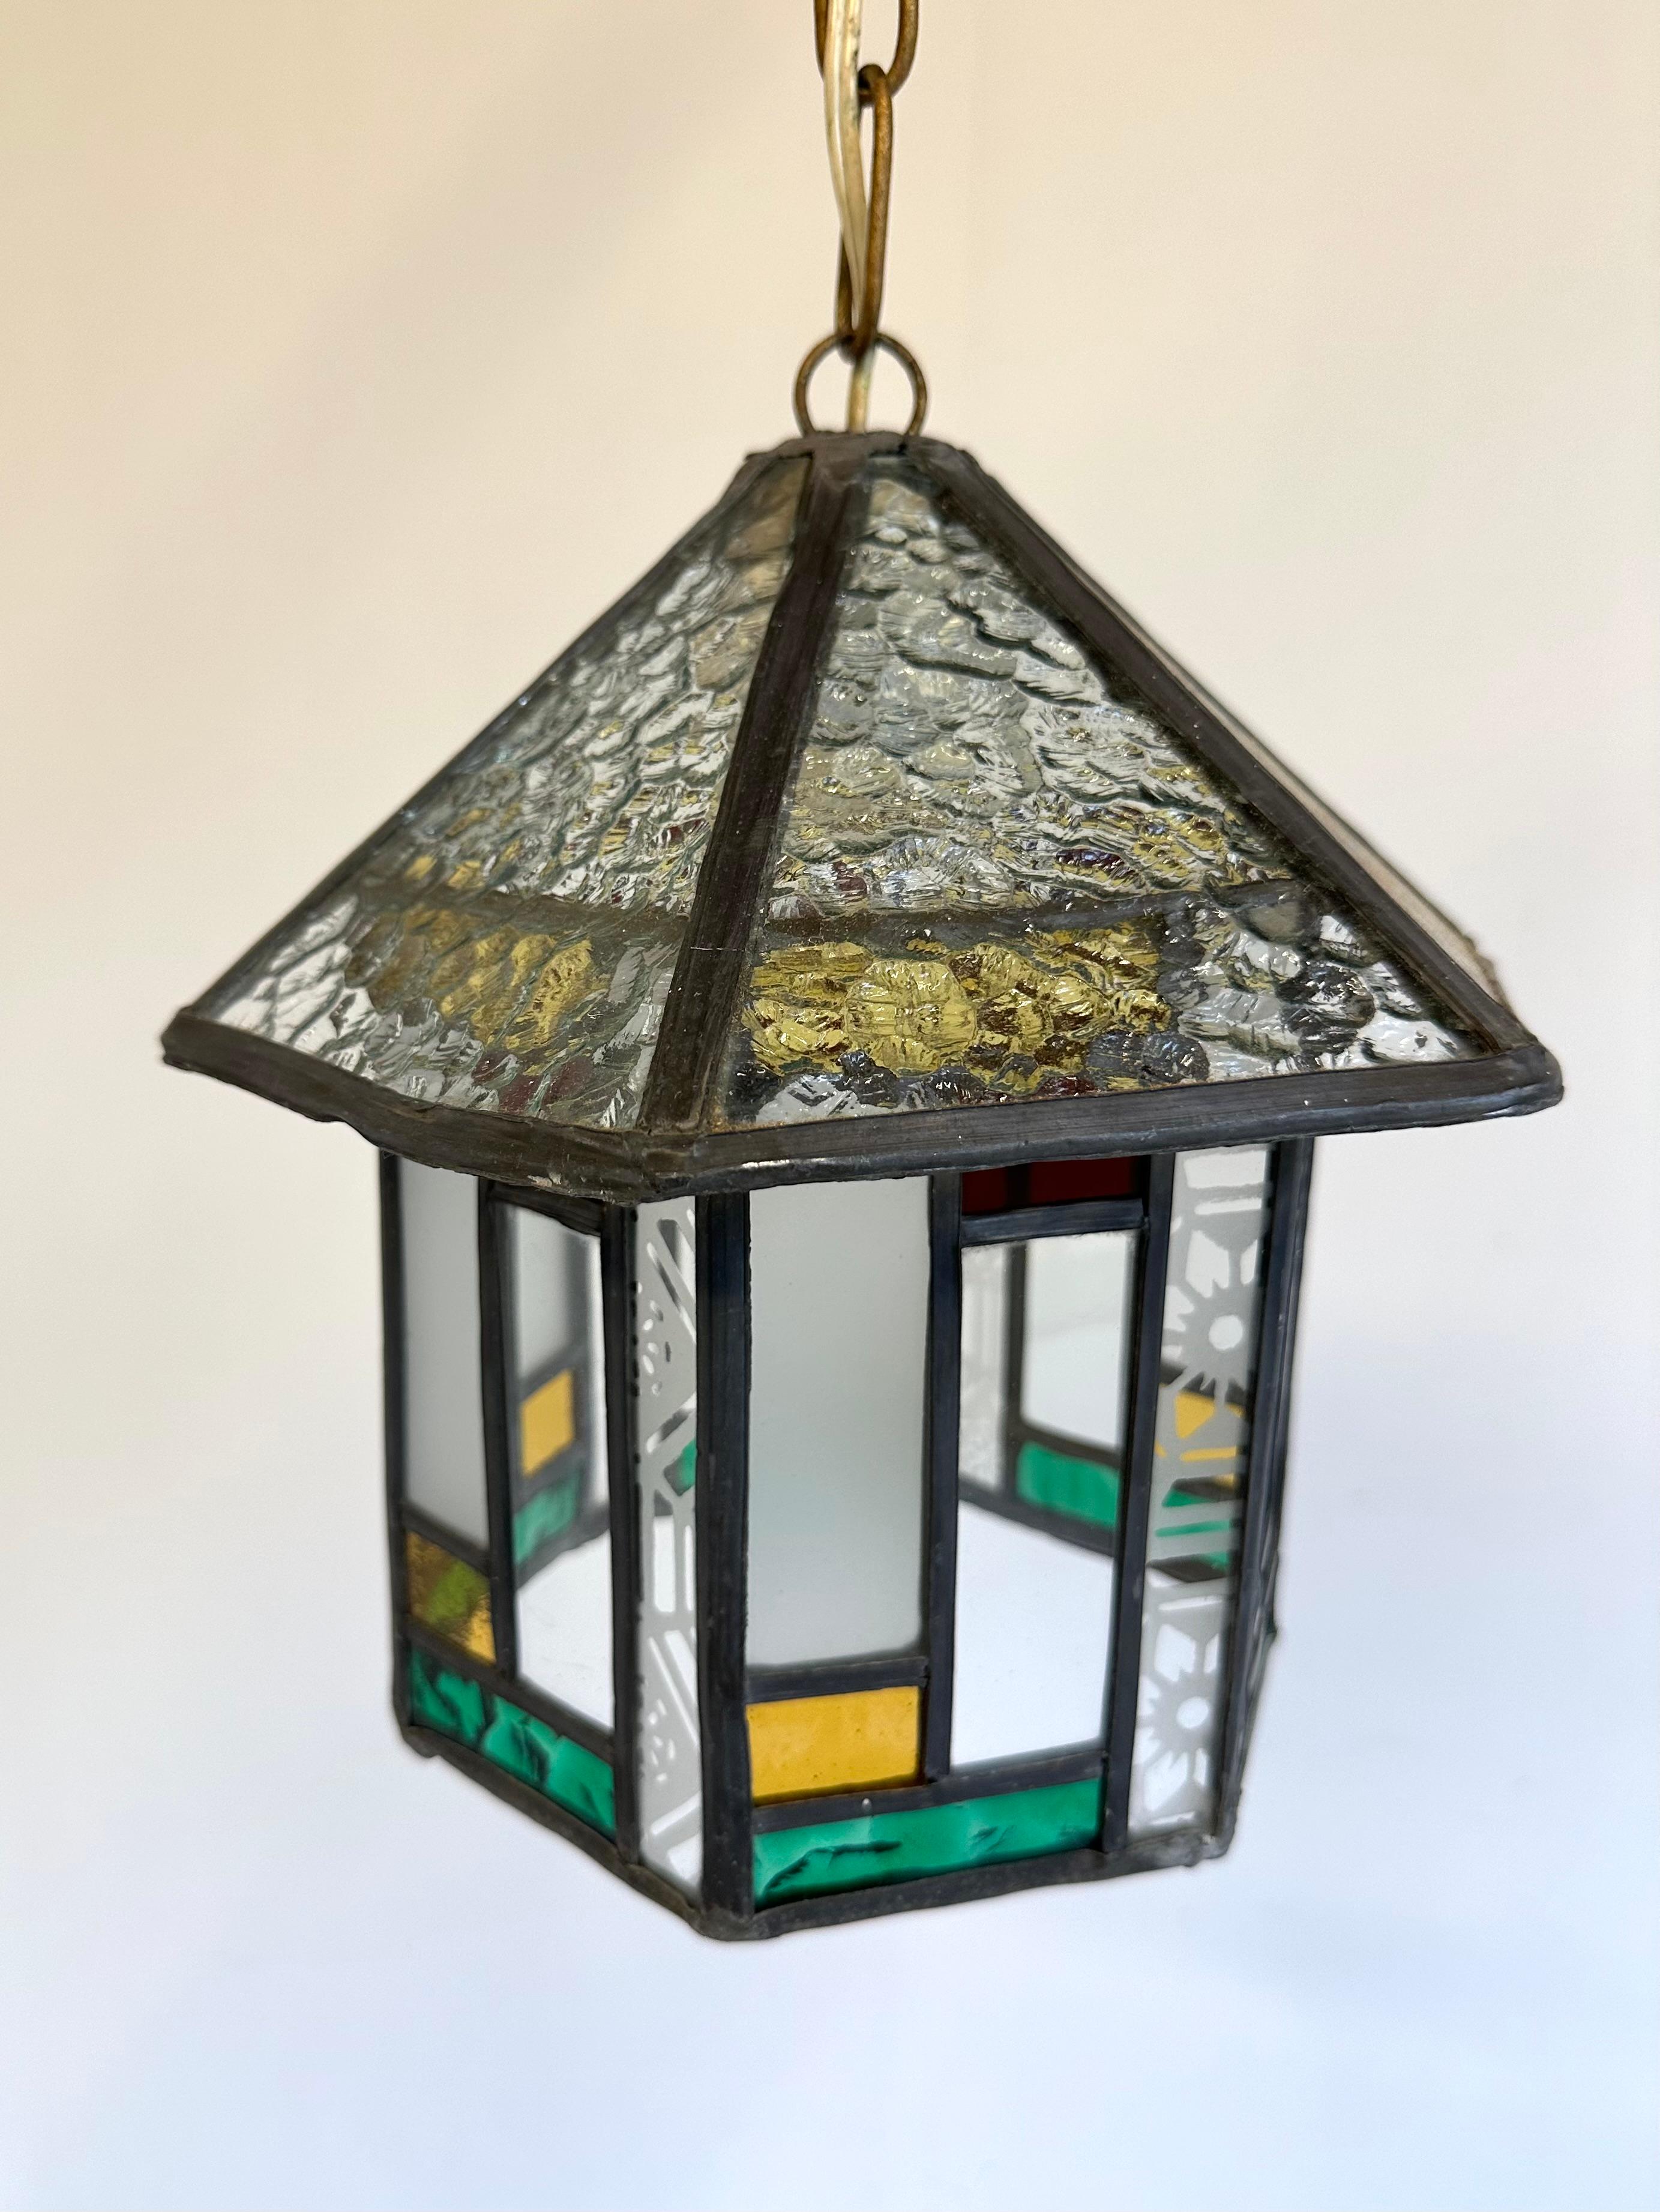 Amsterdam School Dutch art deco hexagonal hallway lantern pendant light stained glass 1920 